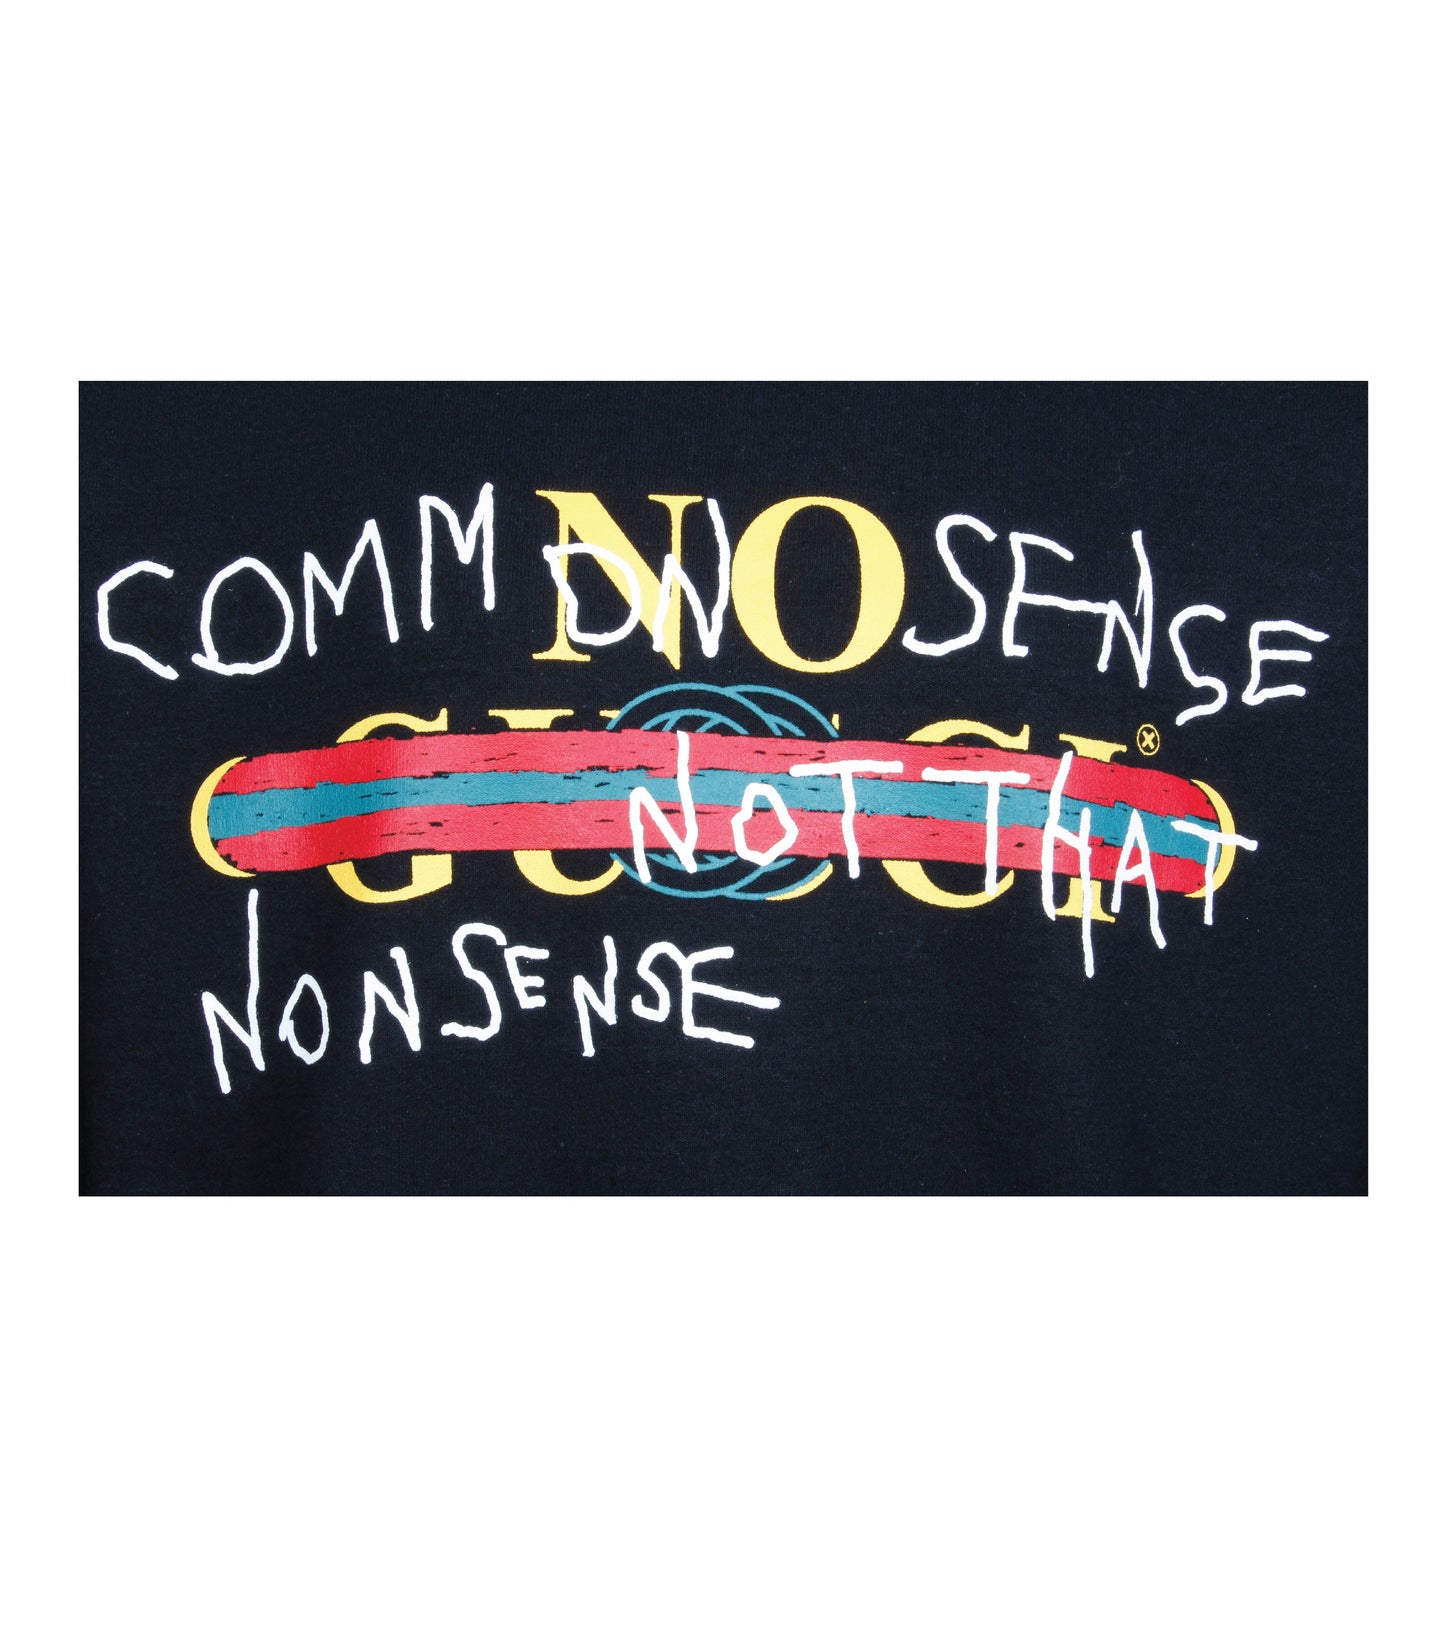 No Common Sense Sweatshirt (Unisex)